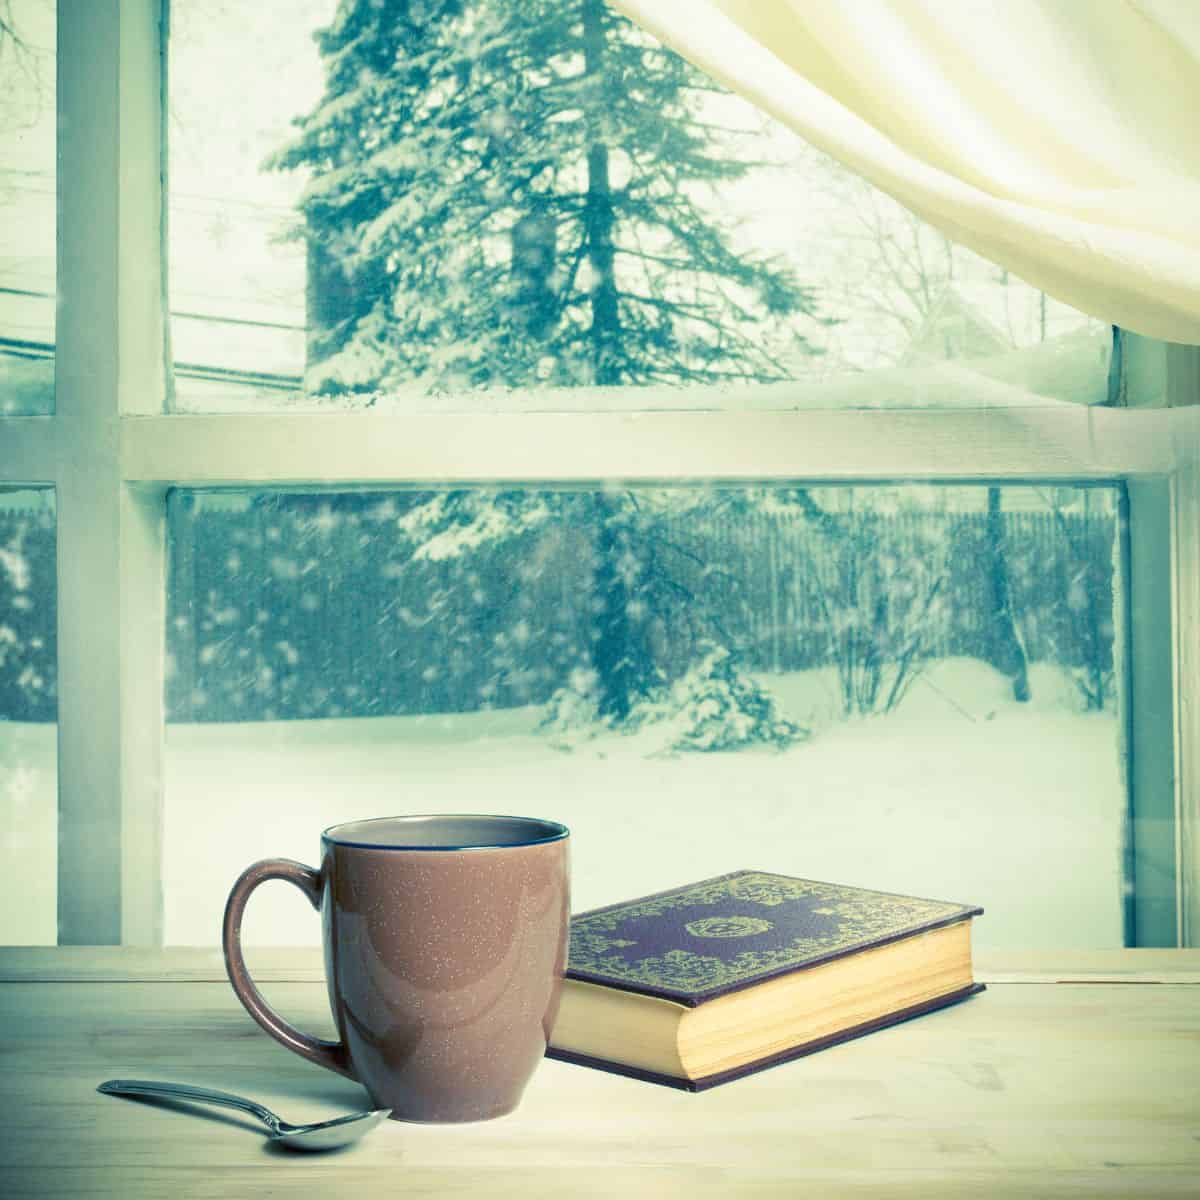 winter book and mug on snowy window ledge